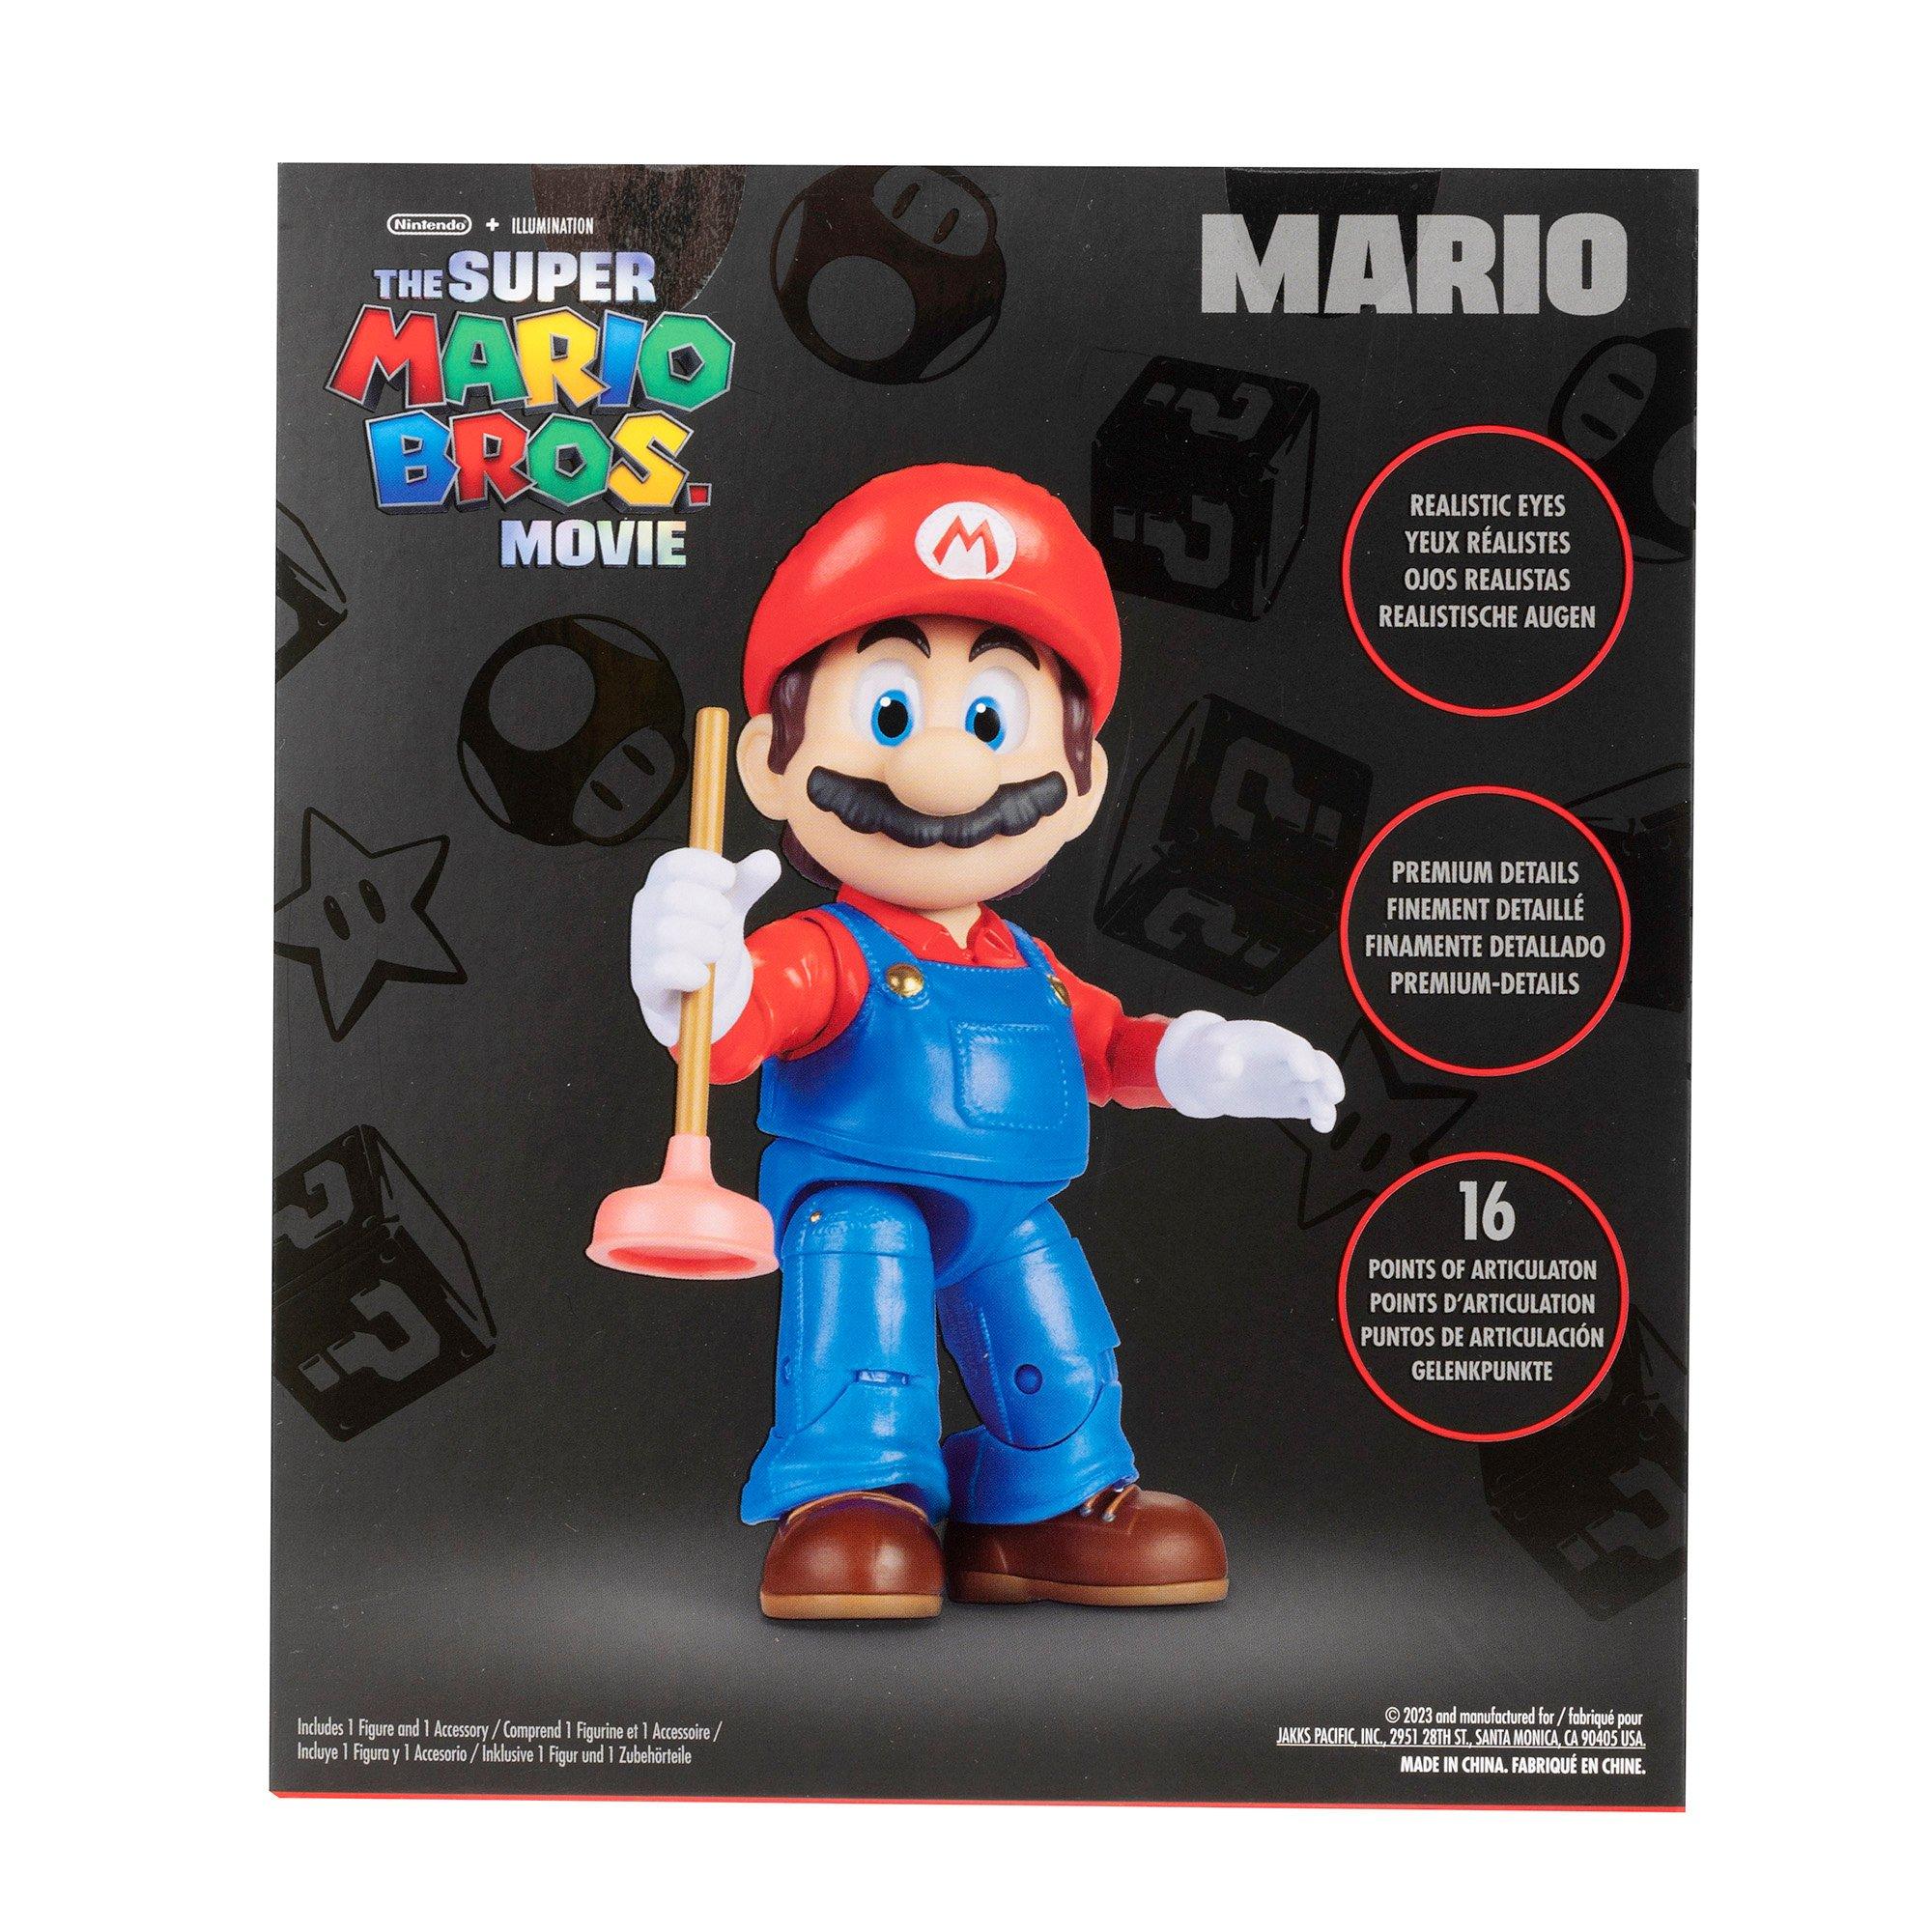 Super Mario World Of Nintendo 2 Inch Mini Figure Wave 37 - Set of 5